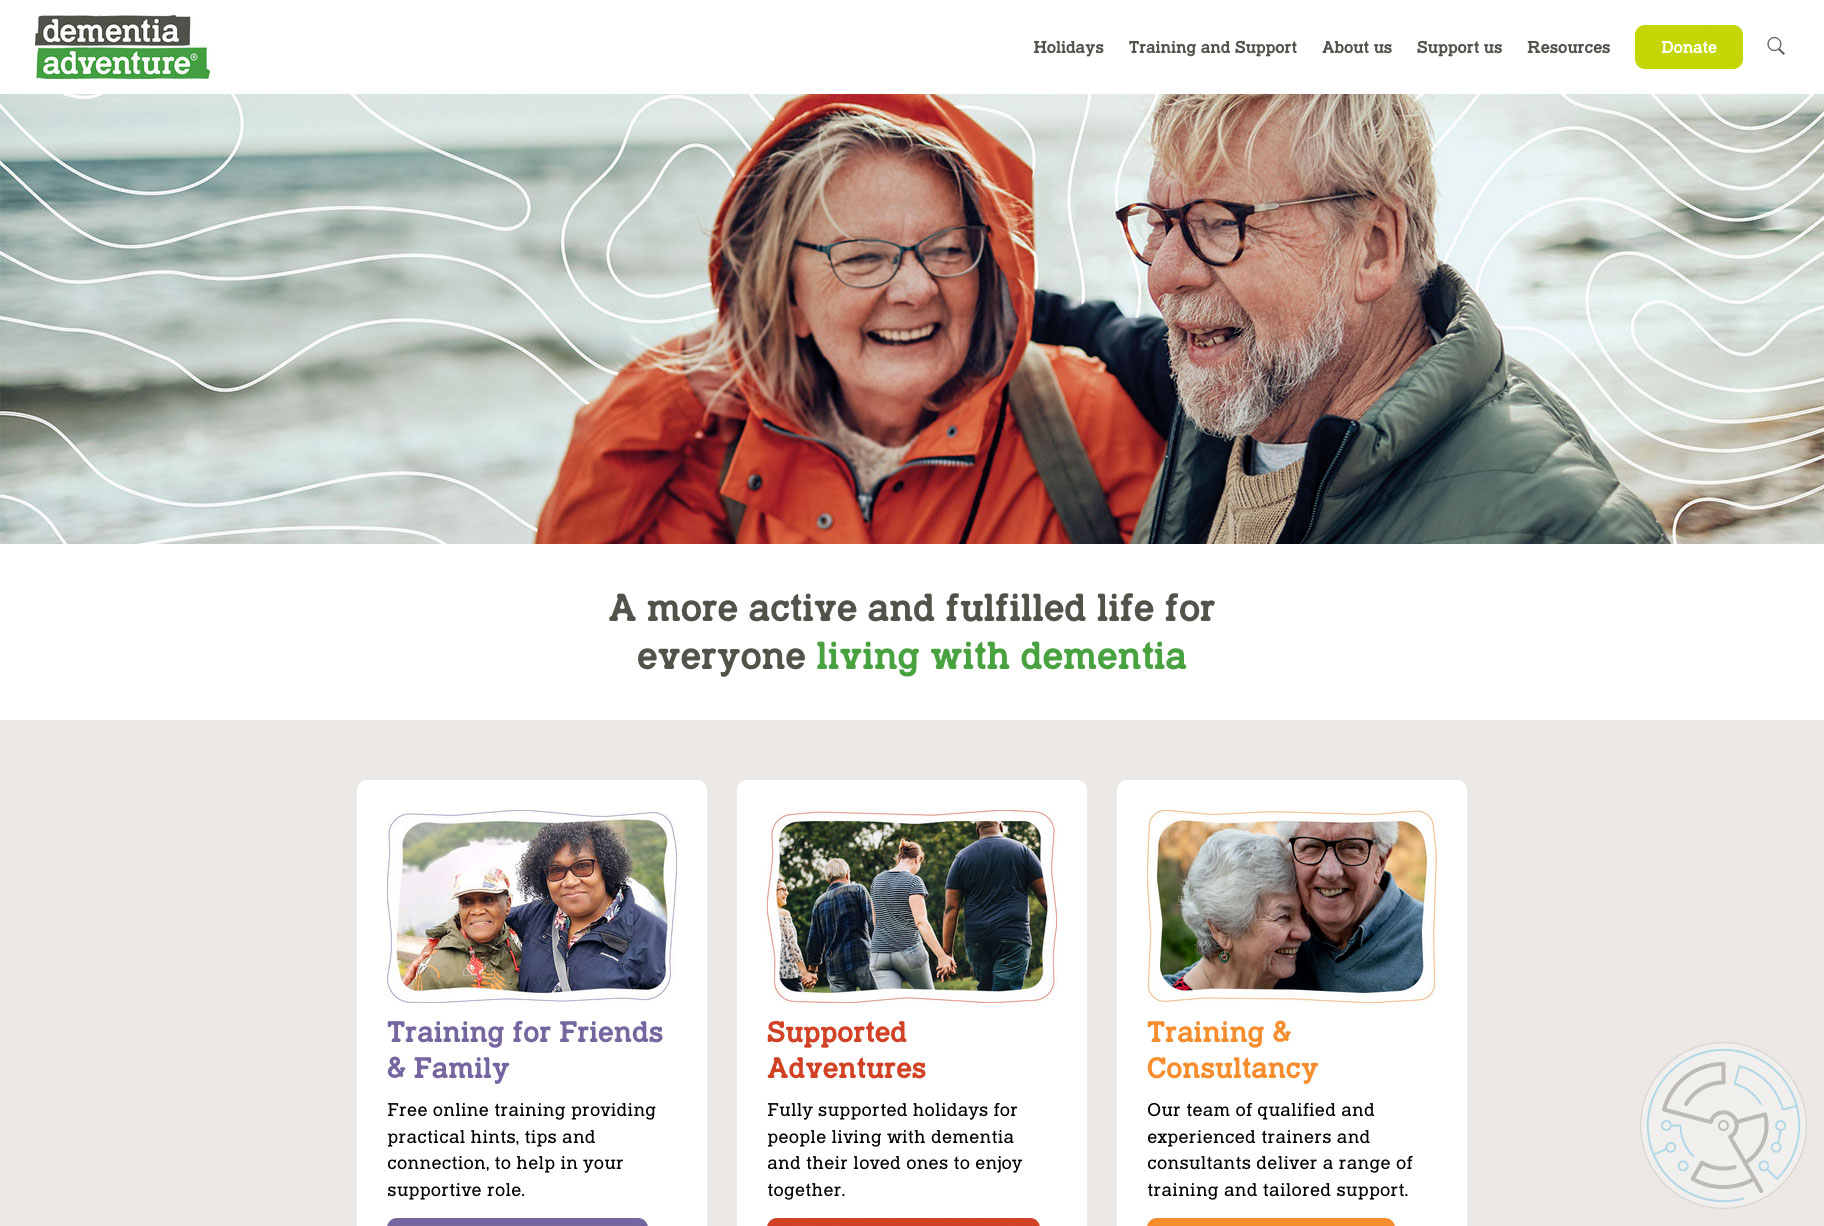 Dementia Adventure website home page